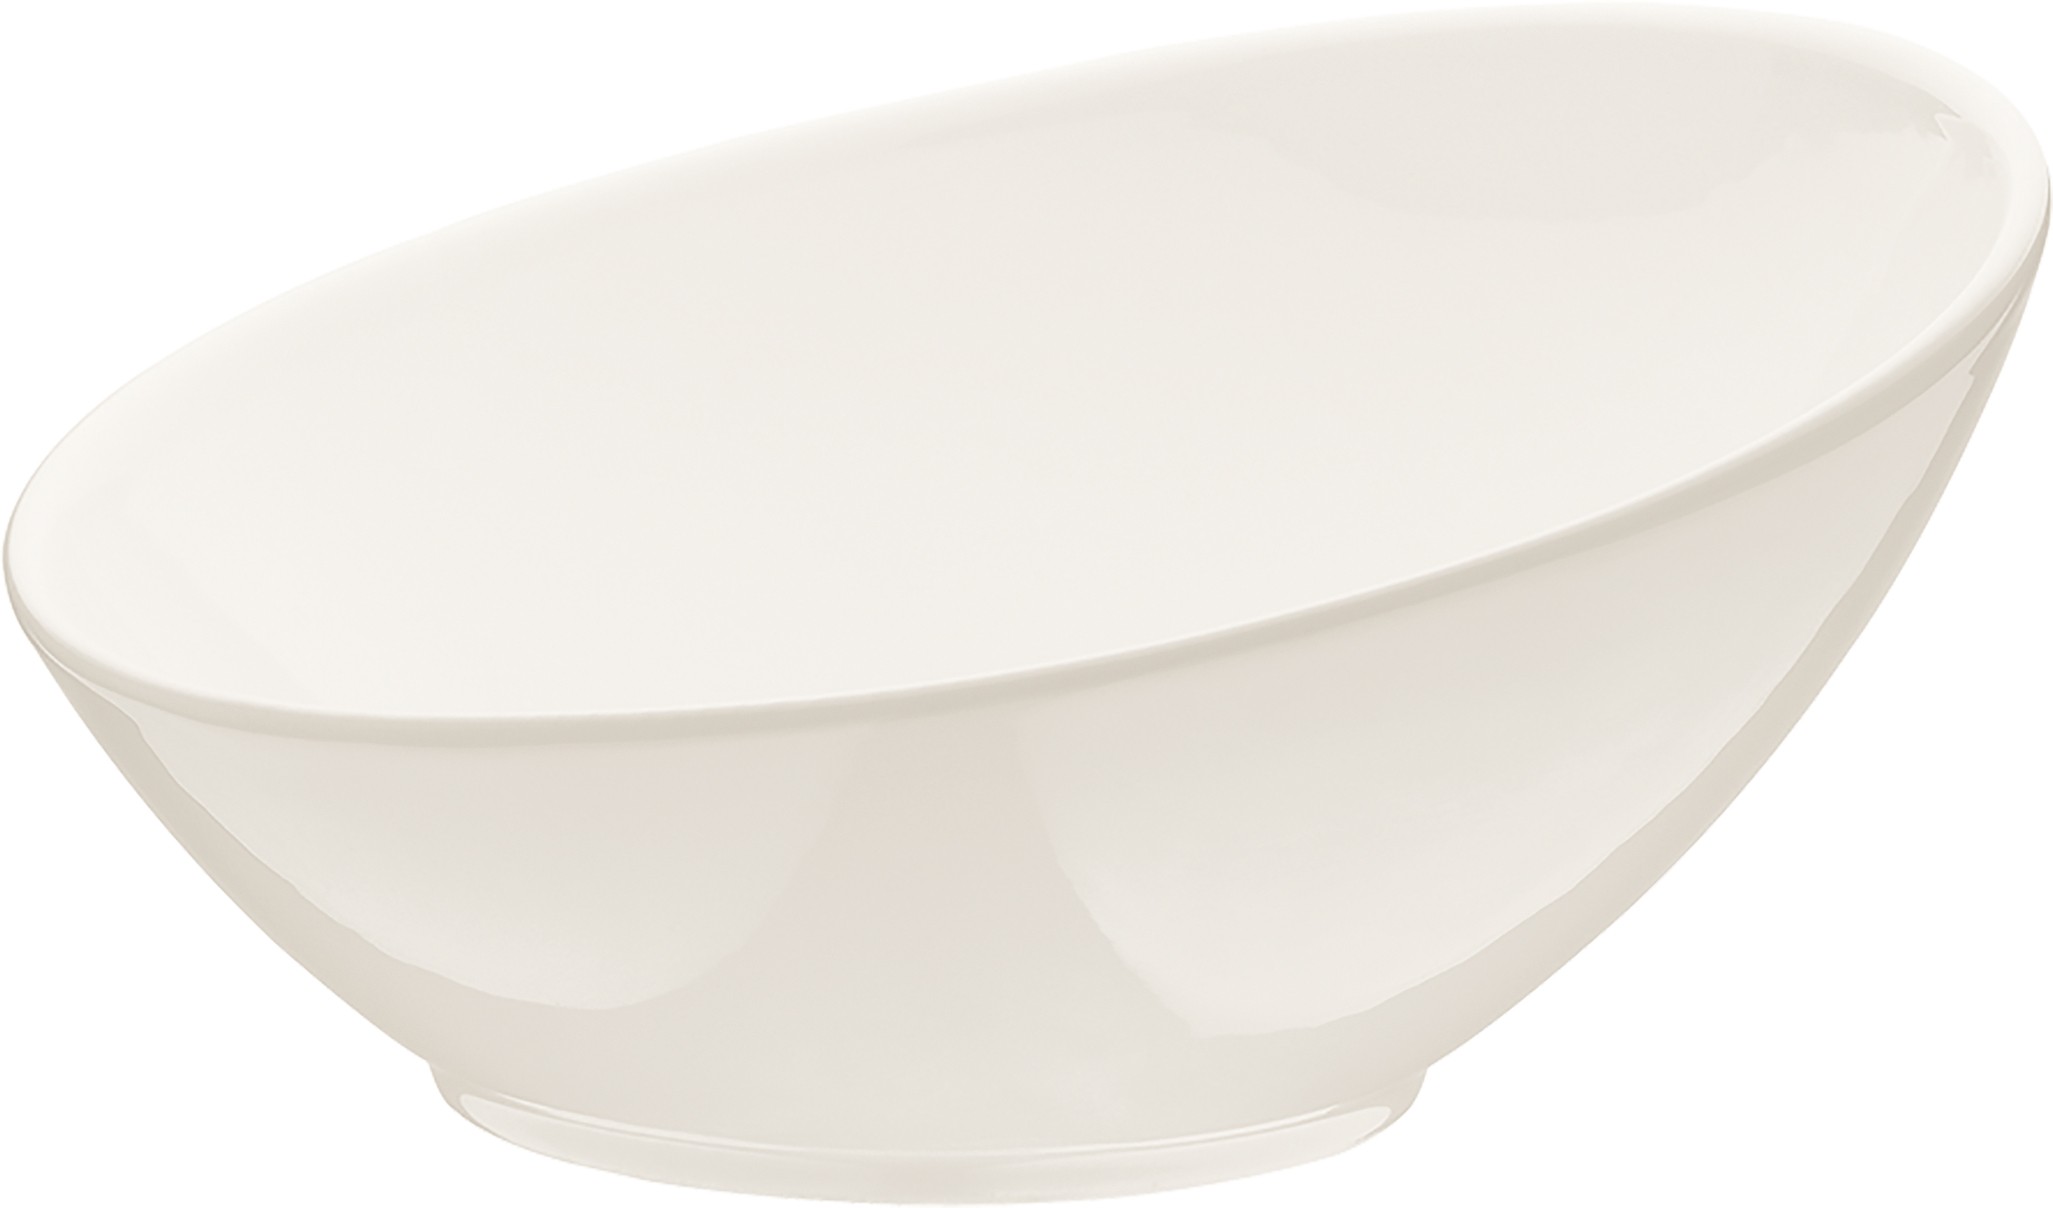 Vanta Cream Schale 26cm Maße: 0 x 0 x 0 cm - Mat.: Premium Porzellan